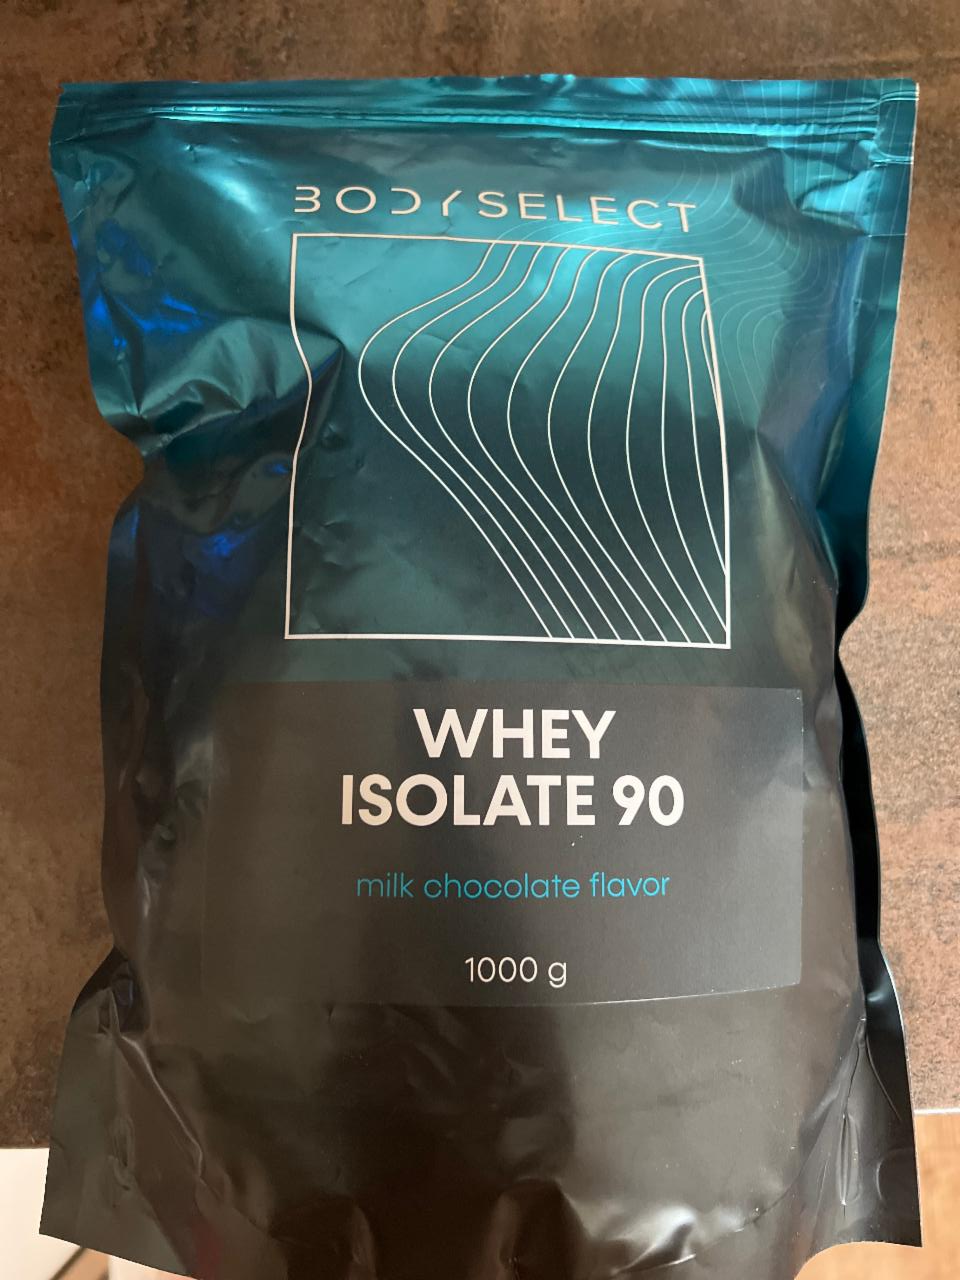 Fotografie - Whey Isolate 90 Milk chocolate flavor Body Select